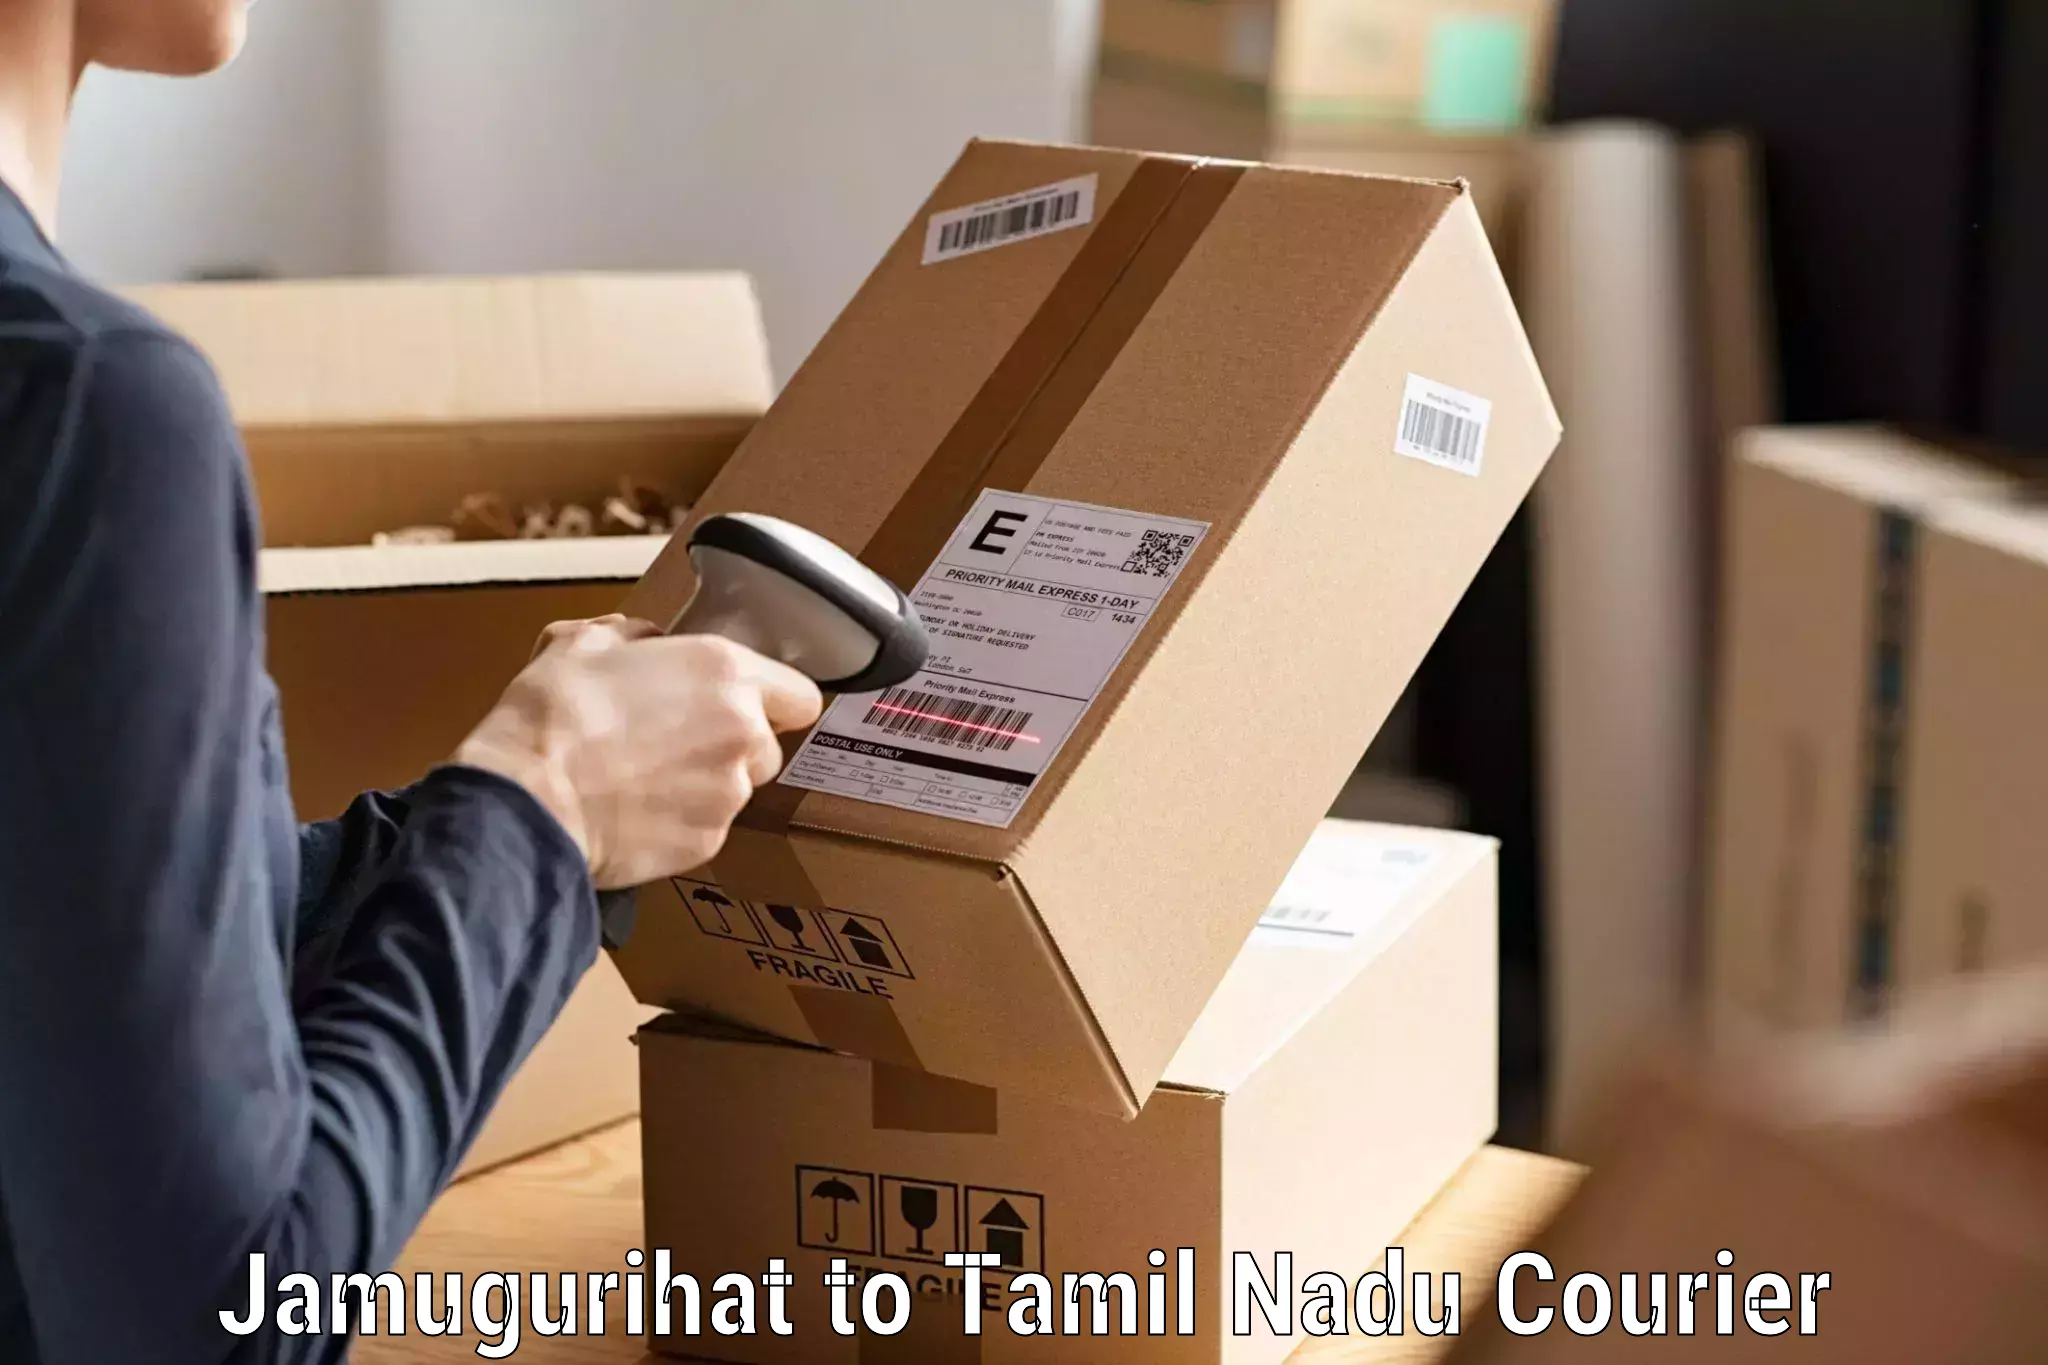 Secure packaging Jamugurihat to Chennai